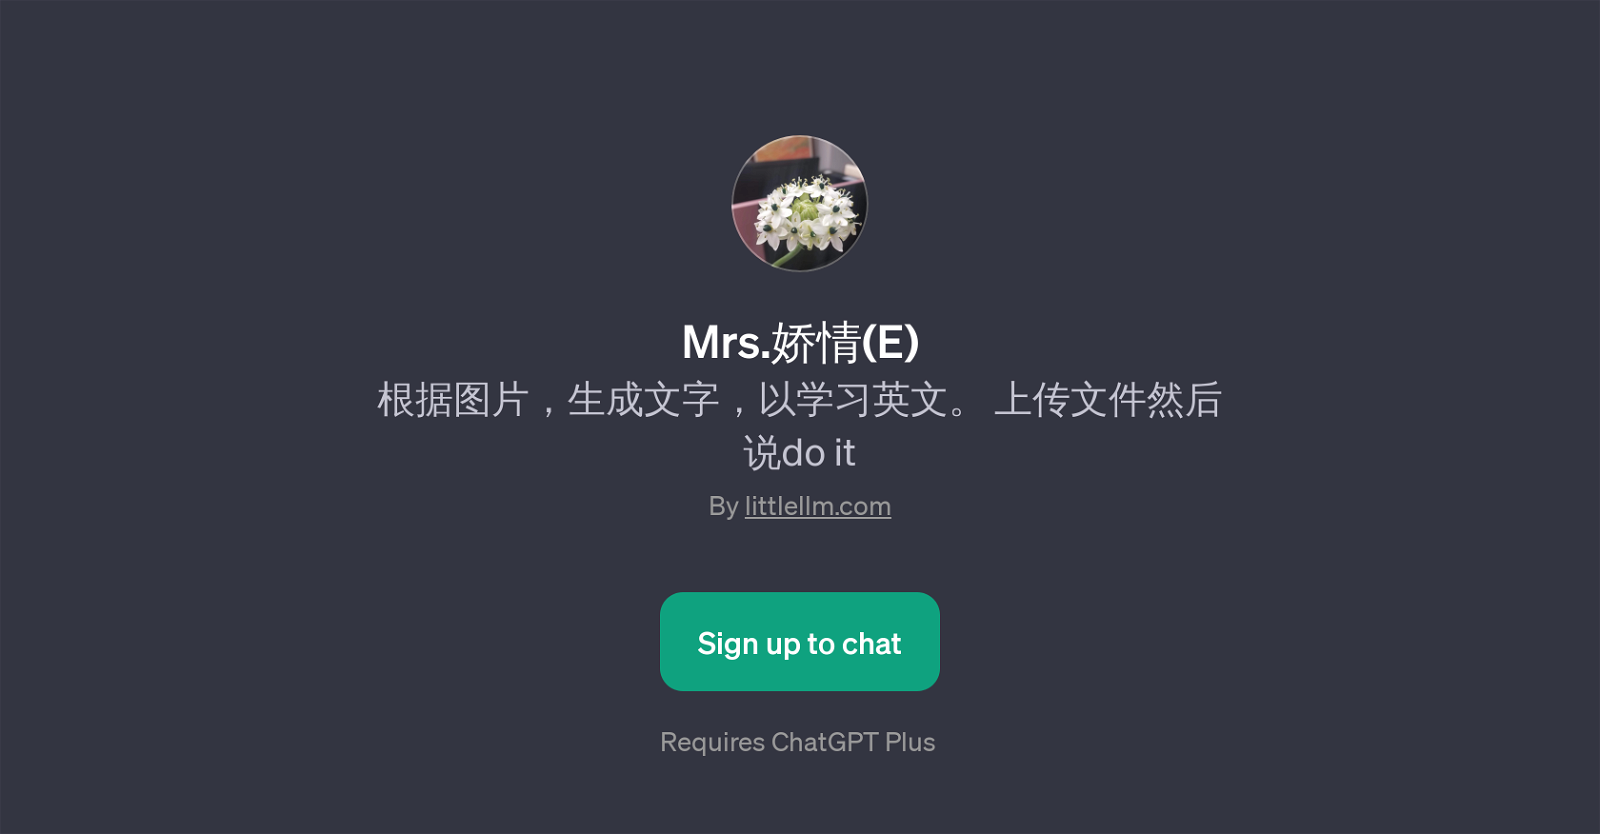 Mrs.(E) website